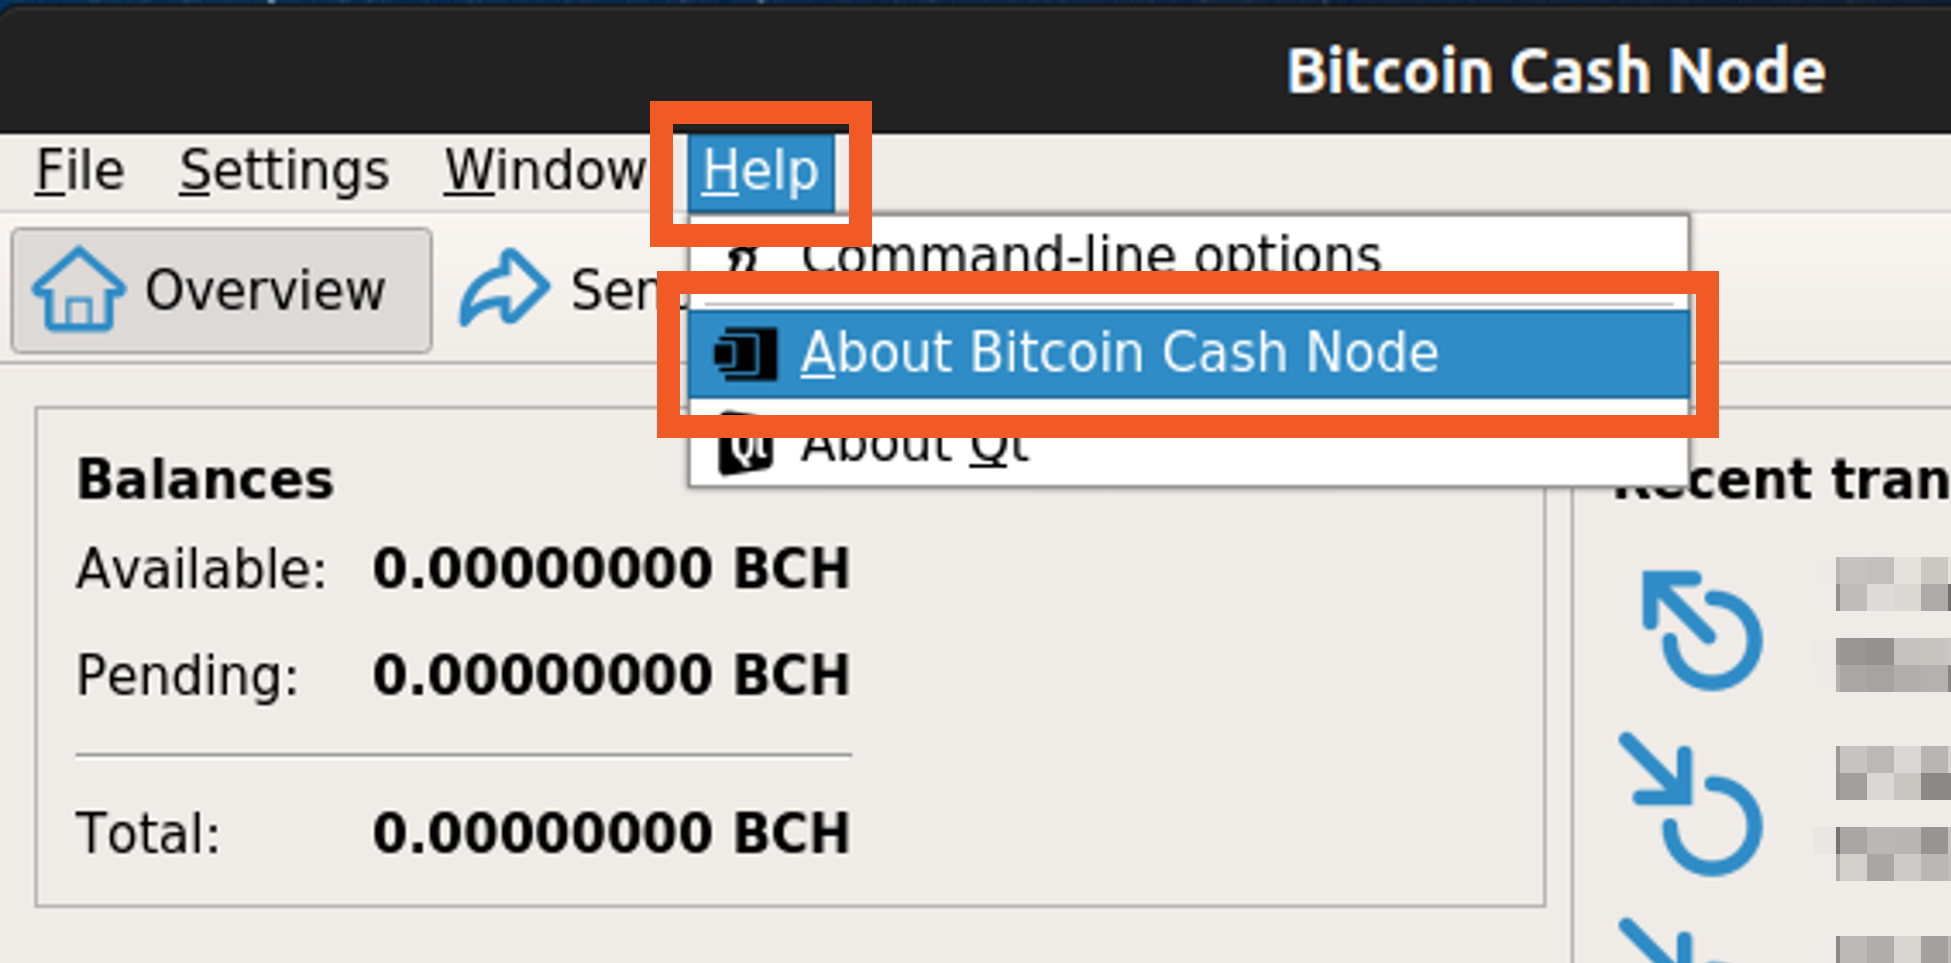 About Bitcoin Cash Node